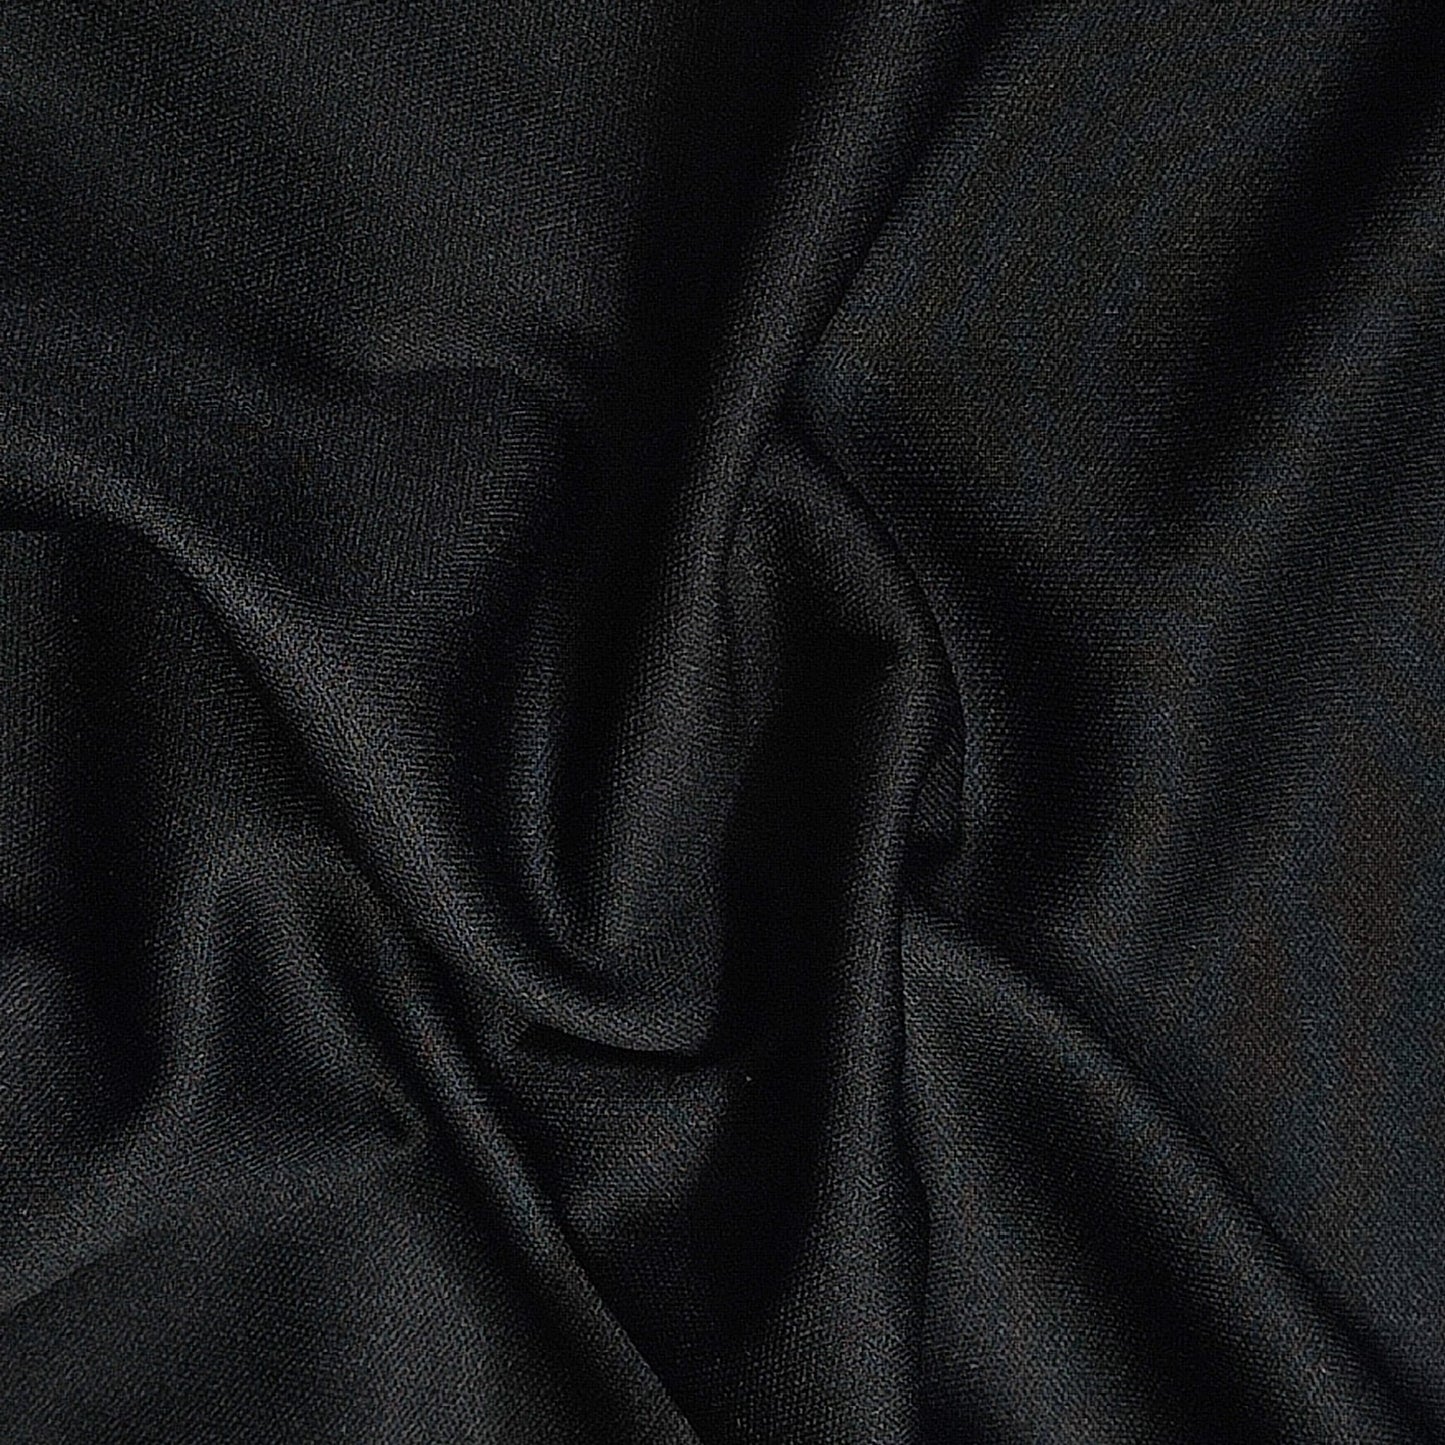 Tela punto de seda negro con caida